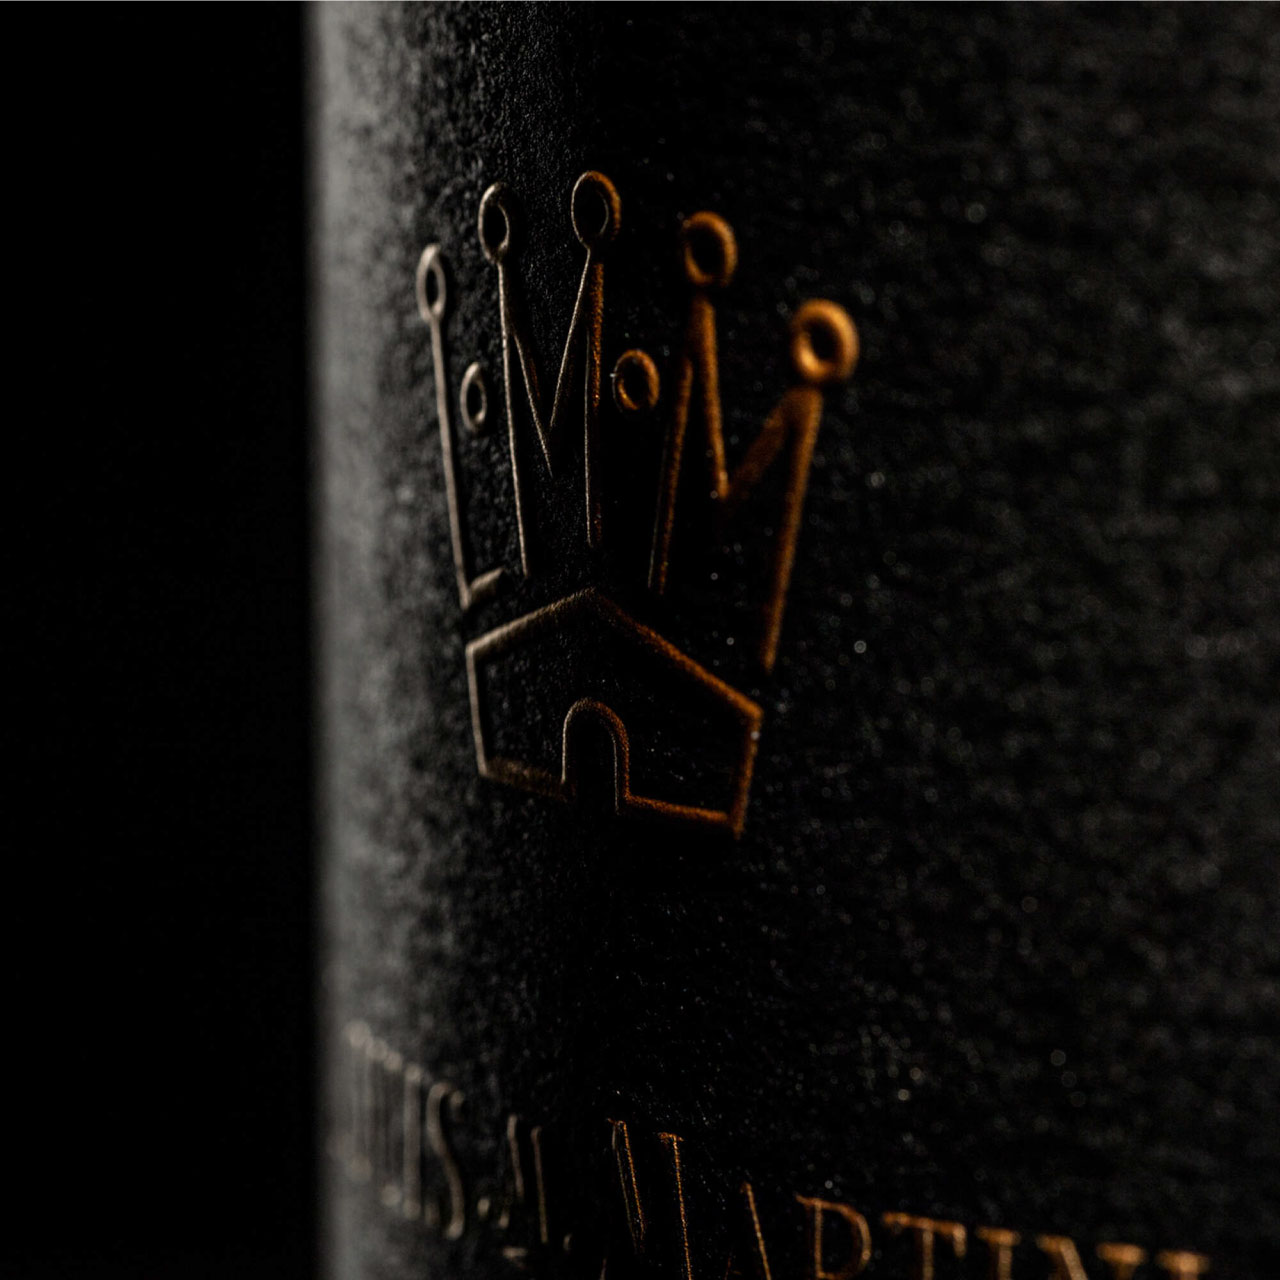 Louis M. Martini crown logo detail on label.